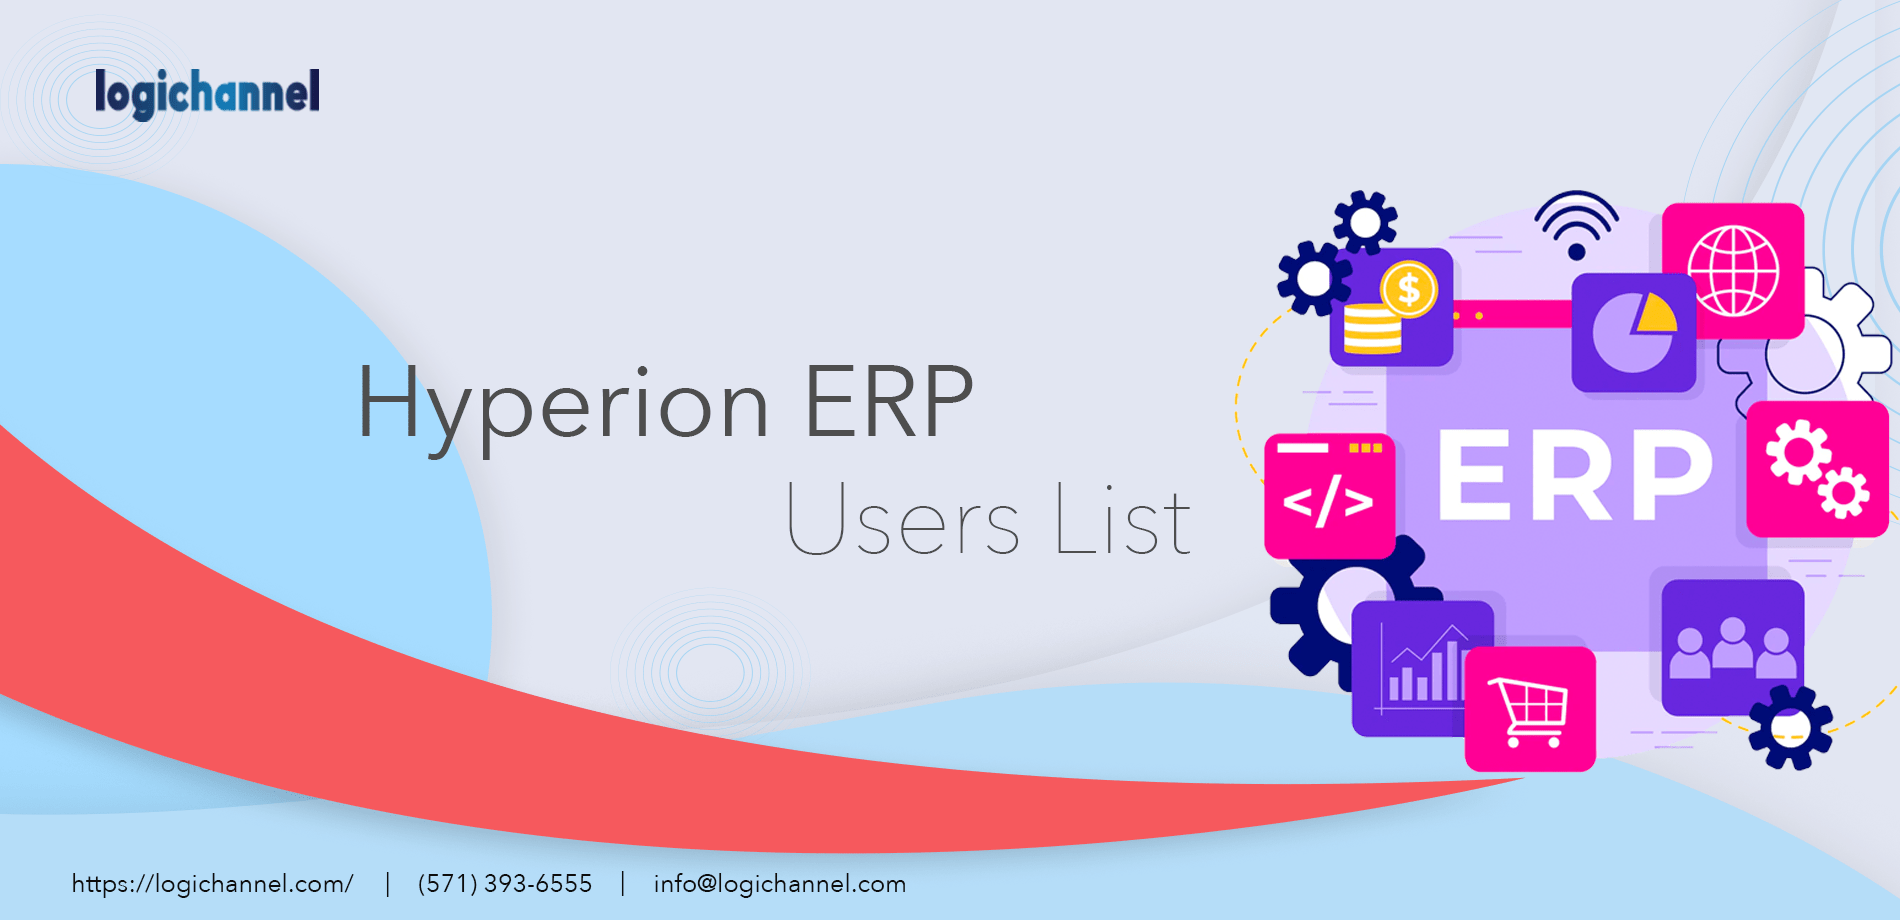 Hyperion ERP Customers List | Hyperion ERP Users List